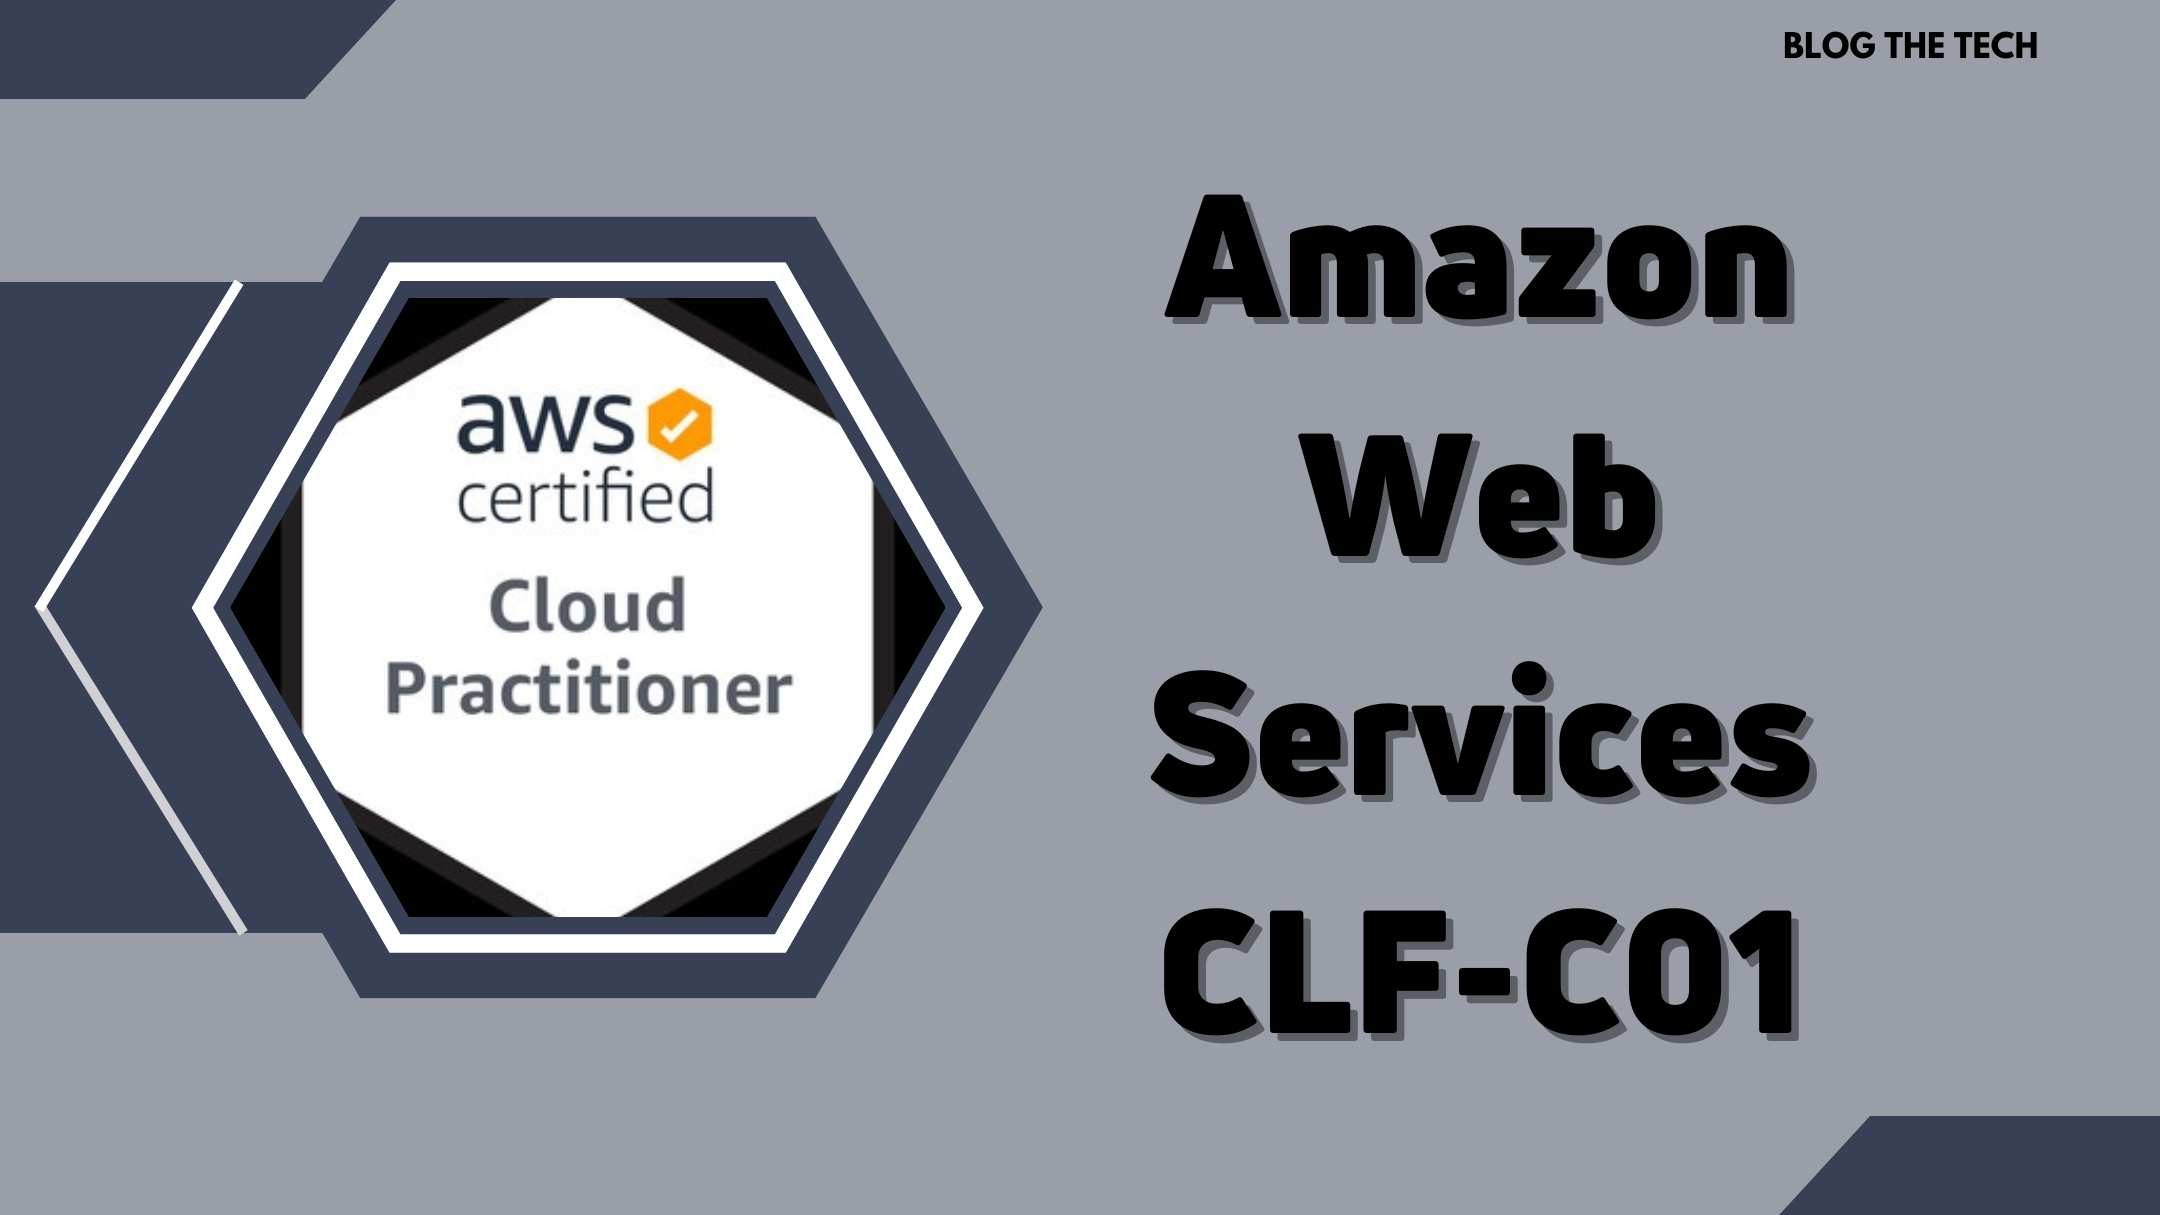 Amazon Web Services CLF C01